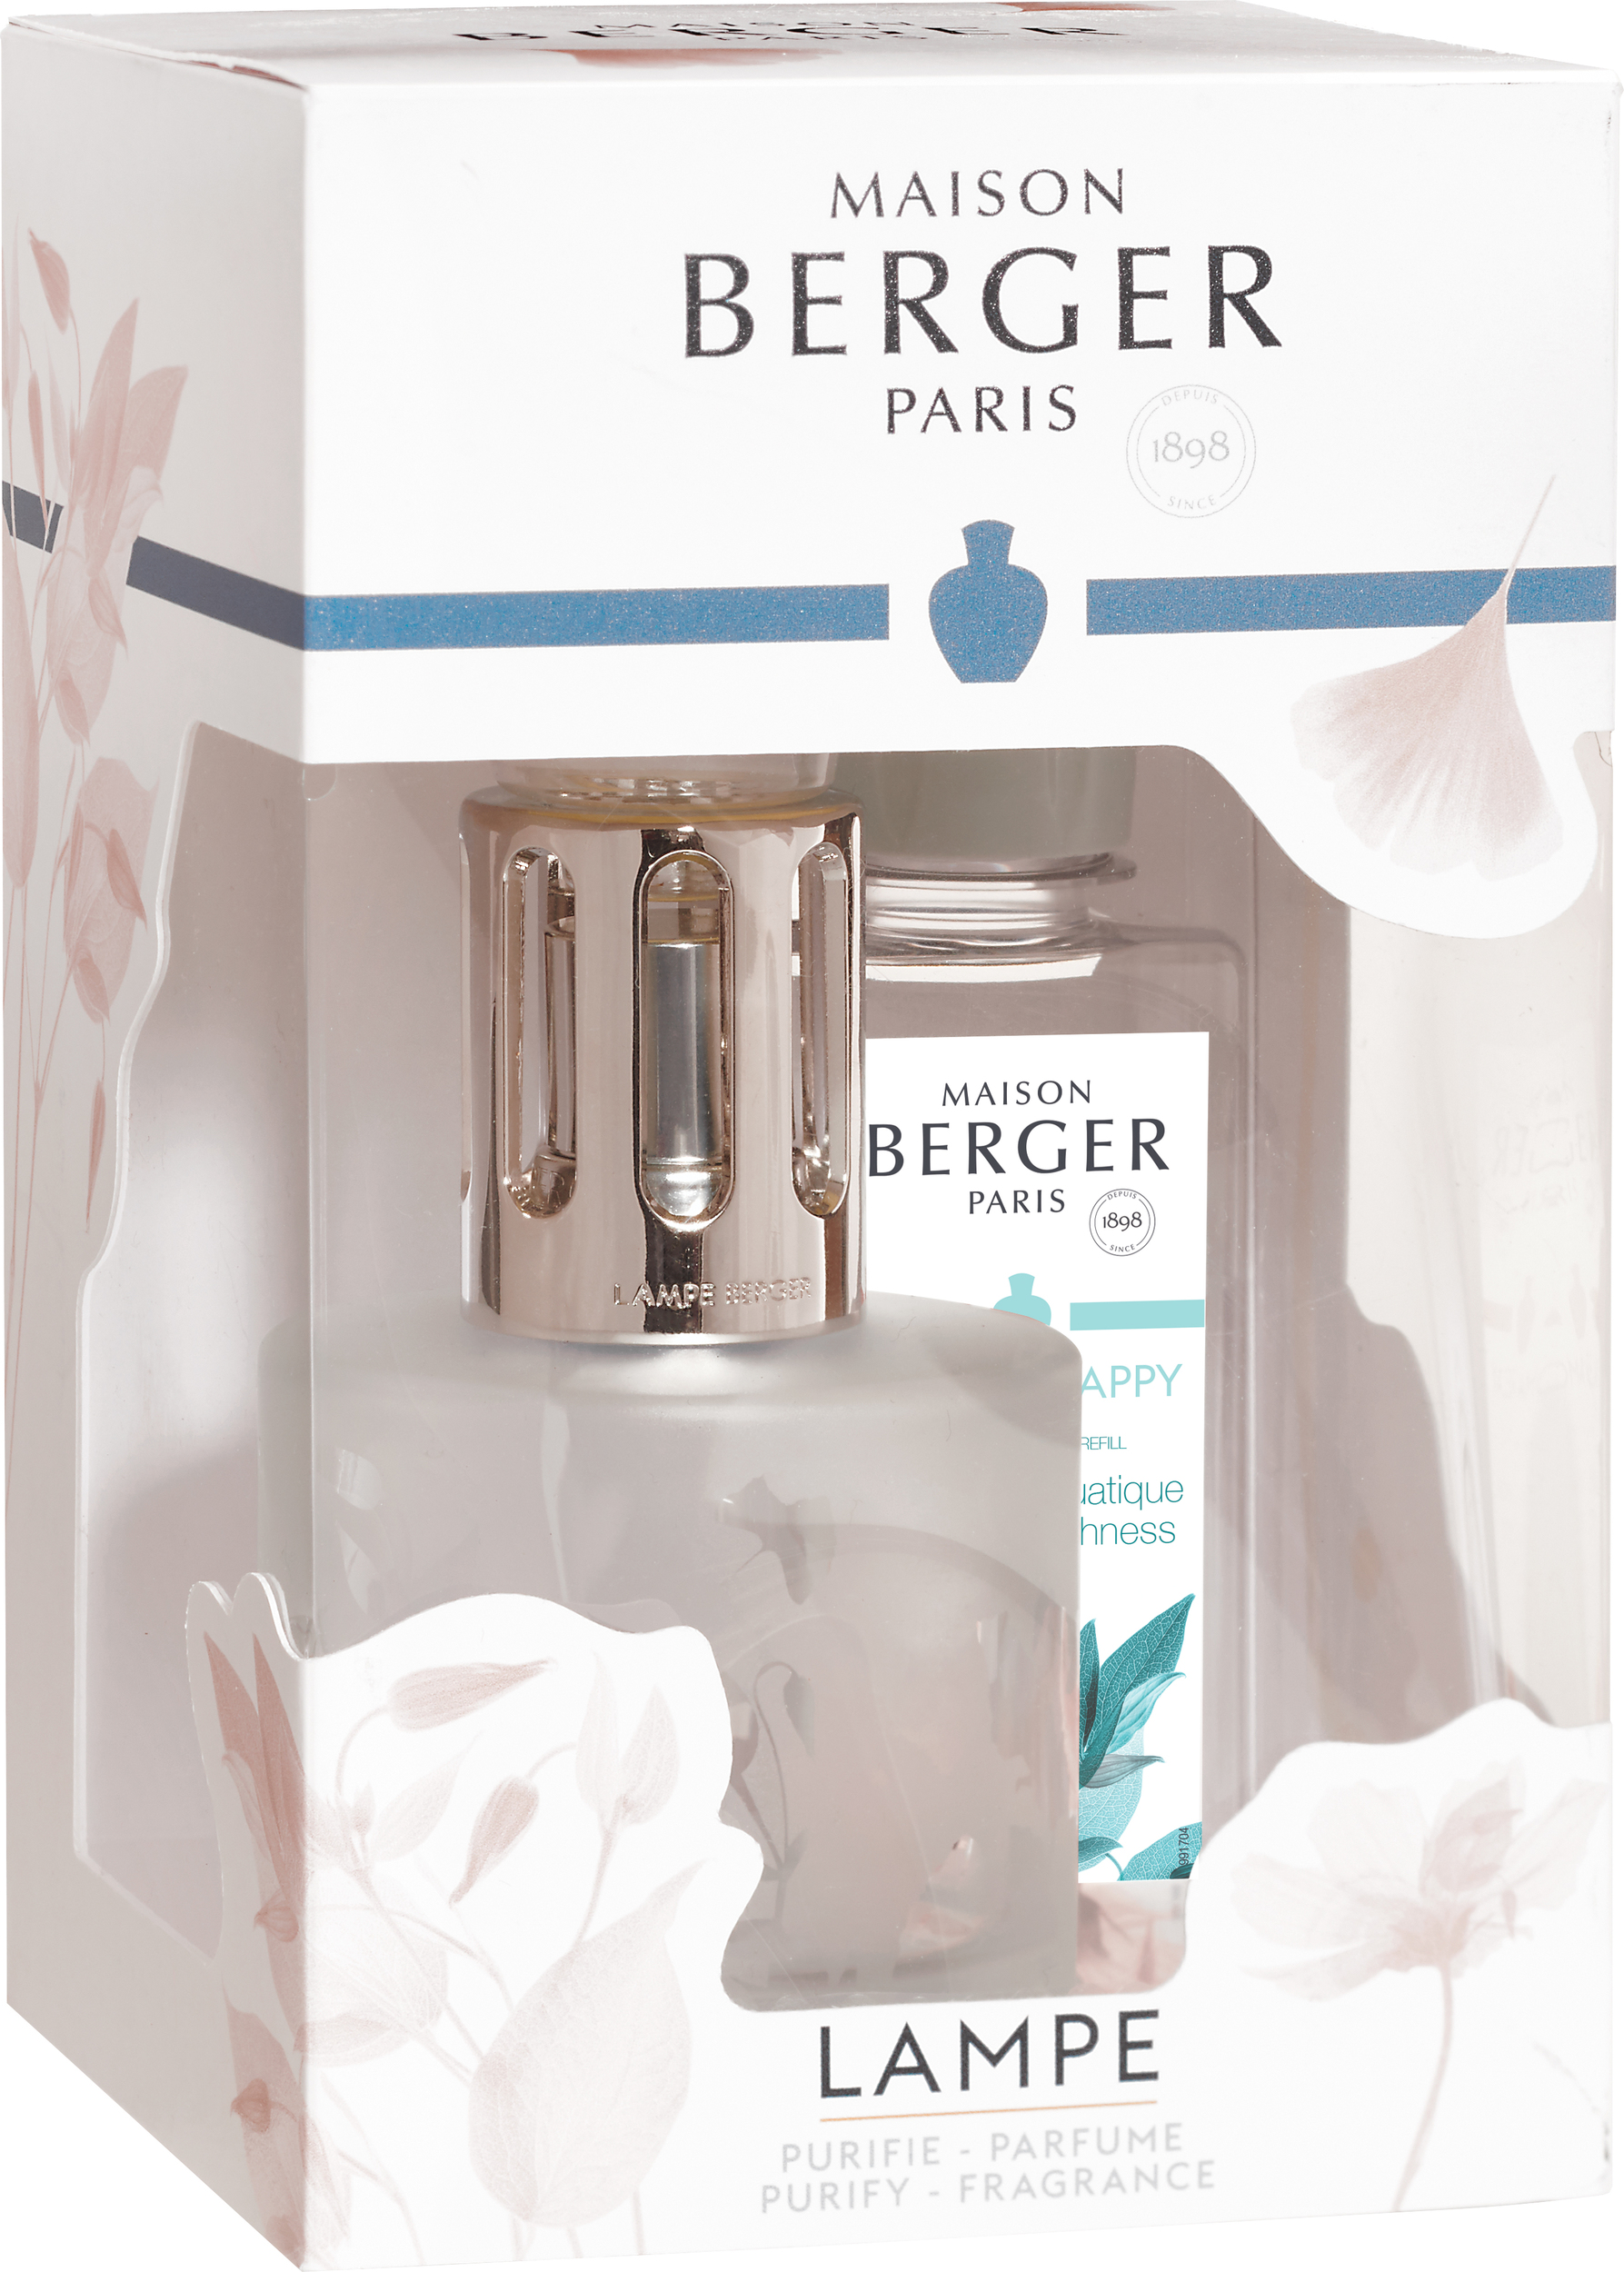 https://3fa-media.com/maison-berger-paris/maison-berger-paris-aroma-catalytic-lamp-with-scent-happy__137066_e2119ed-s2500x2500.jpg